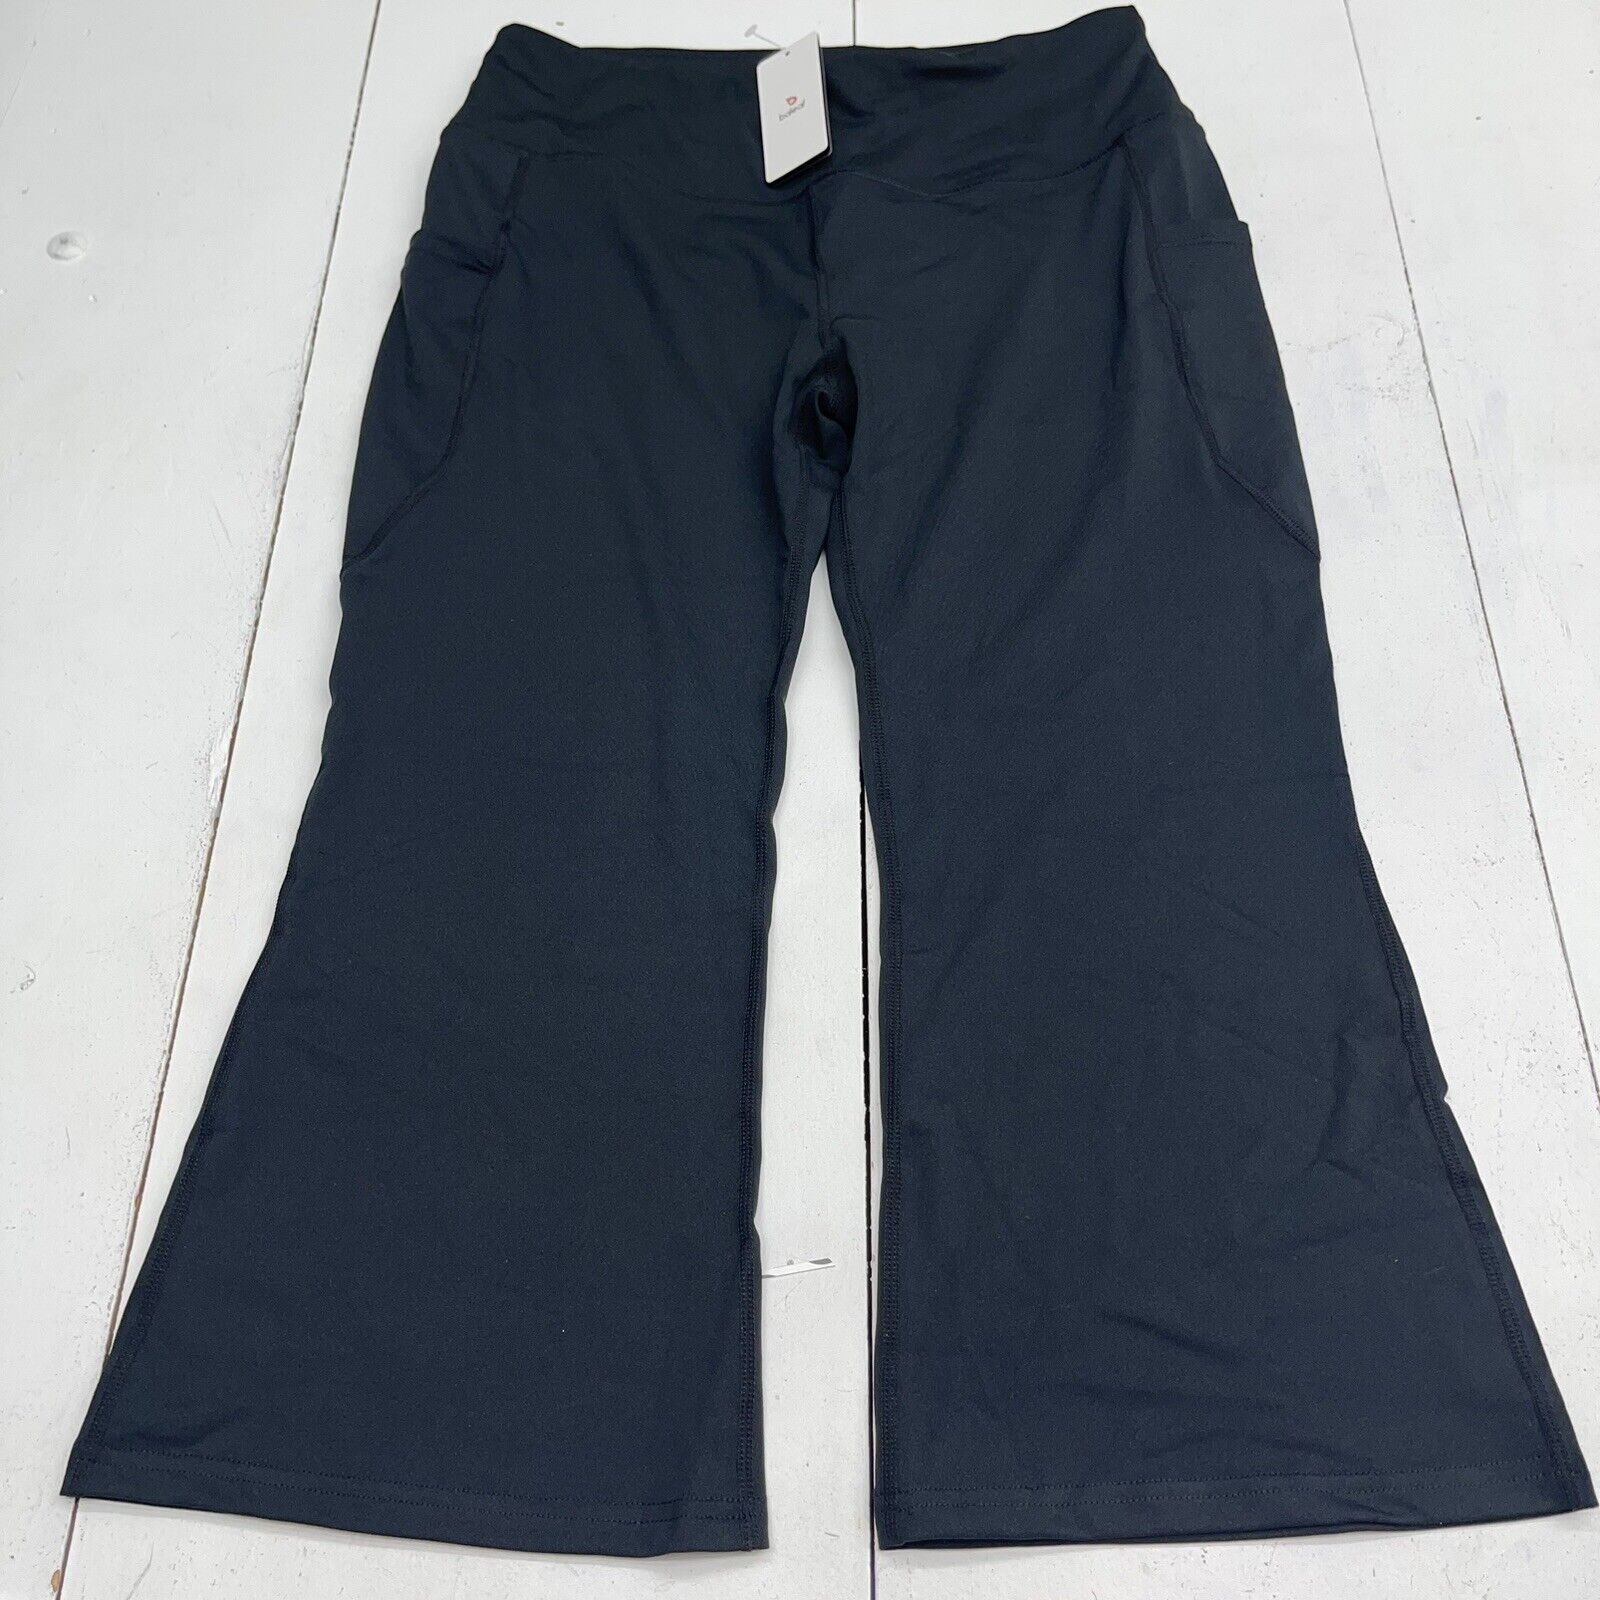 Baleaf Black Capri Side Pocket Activewear Leggings Women's Size